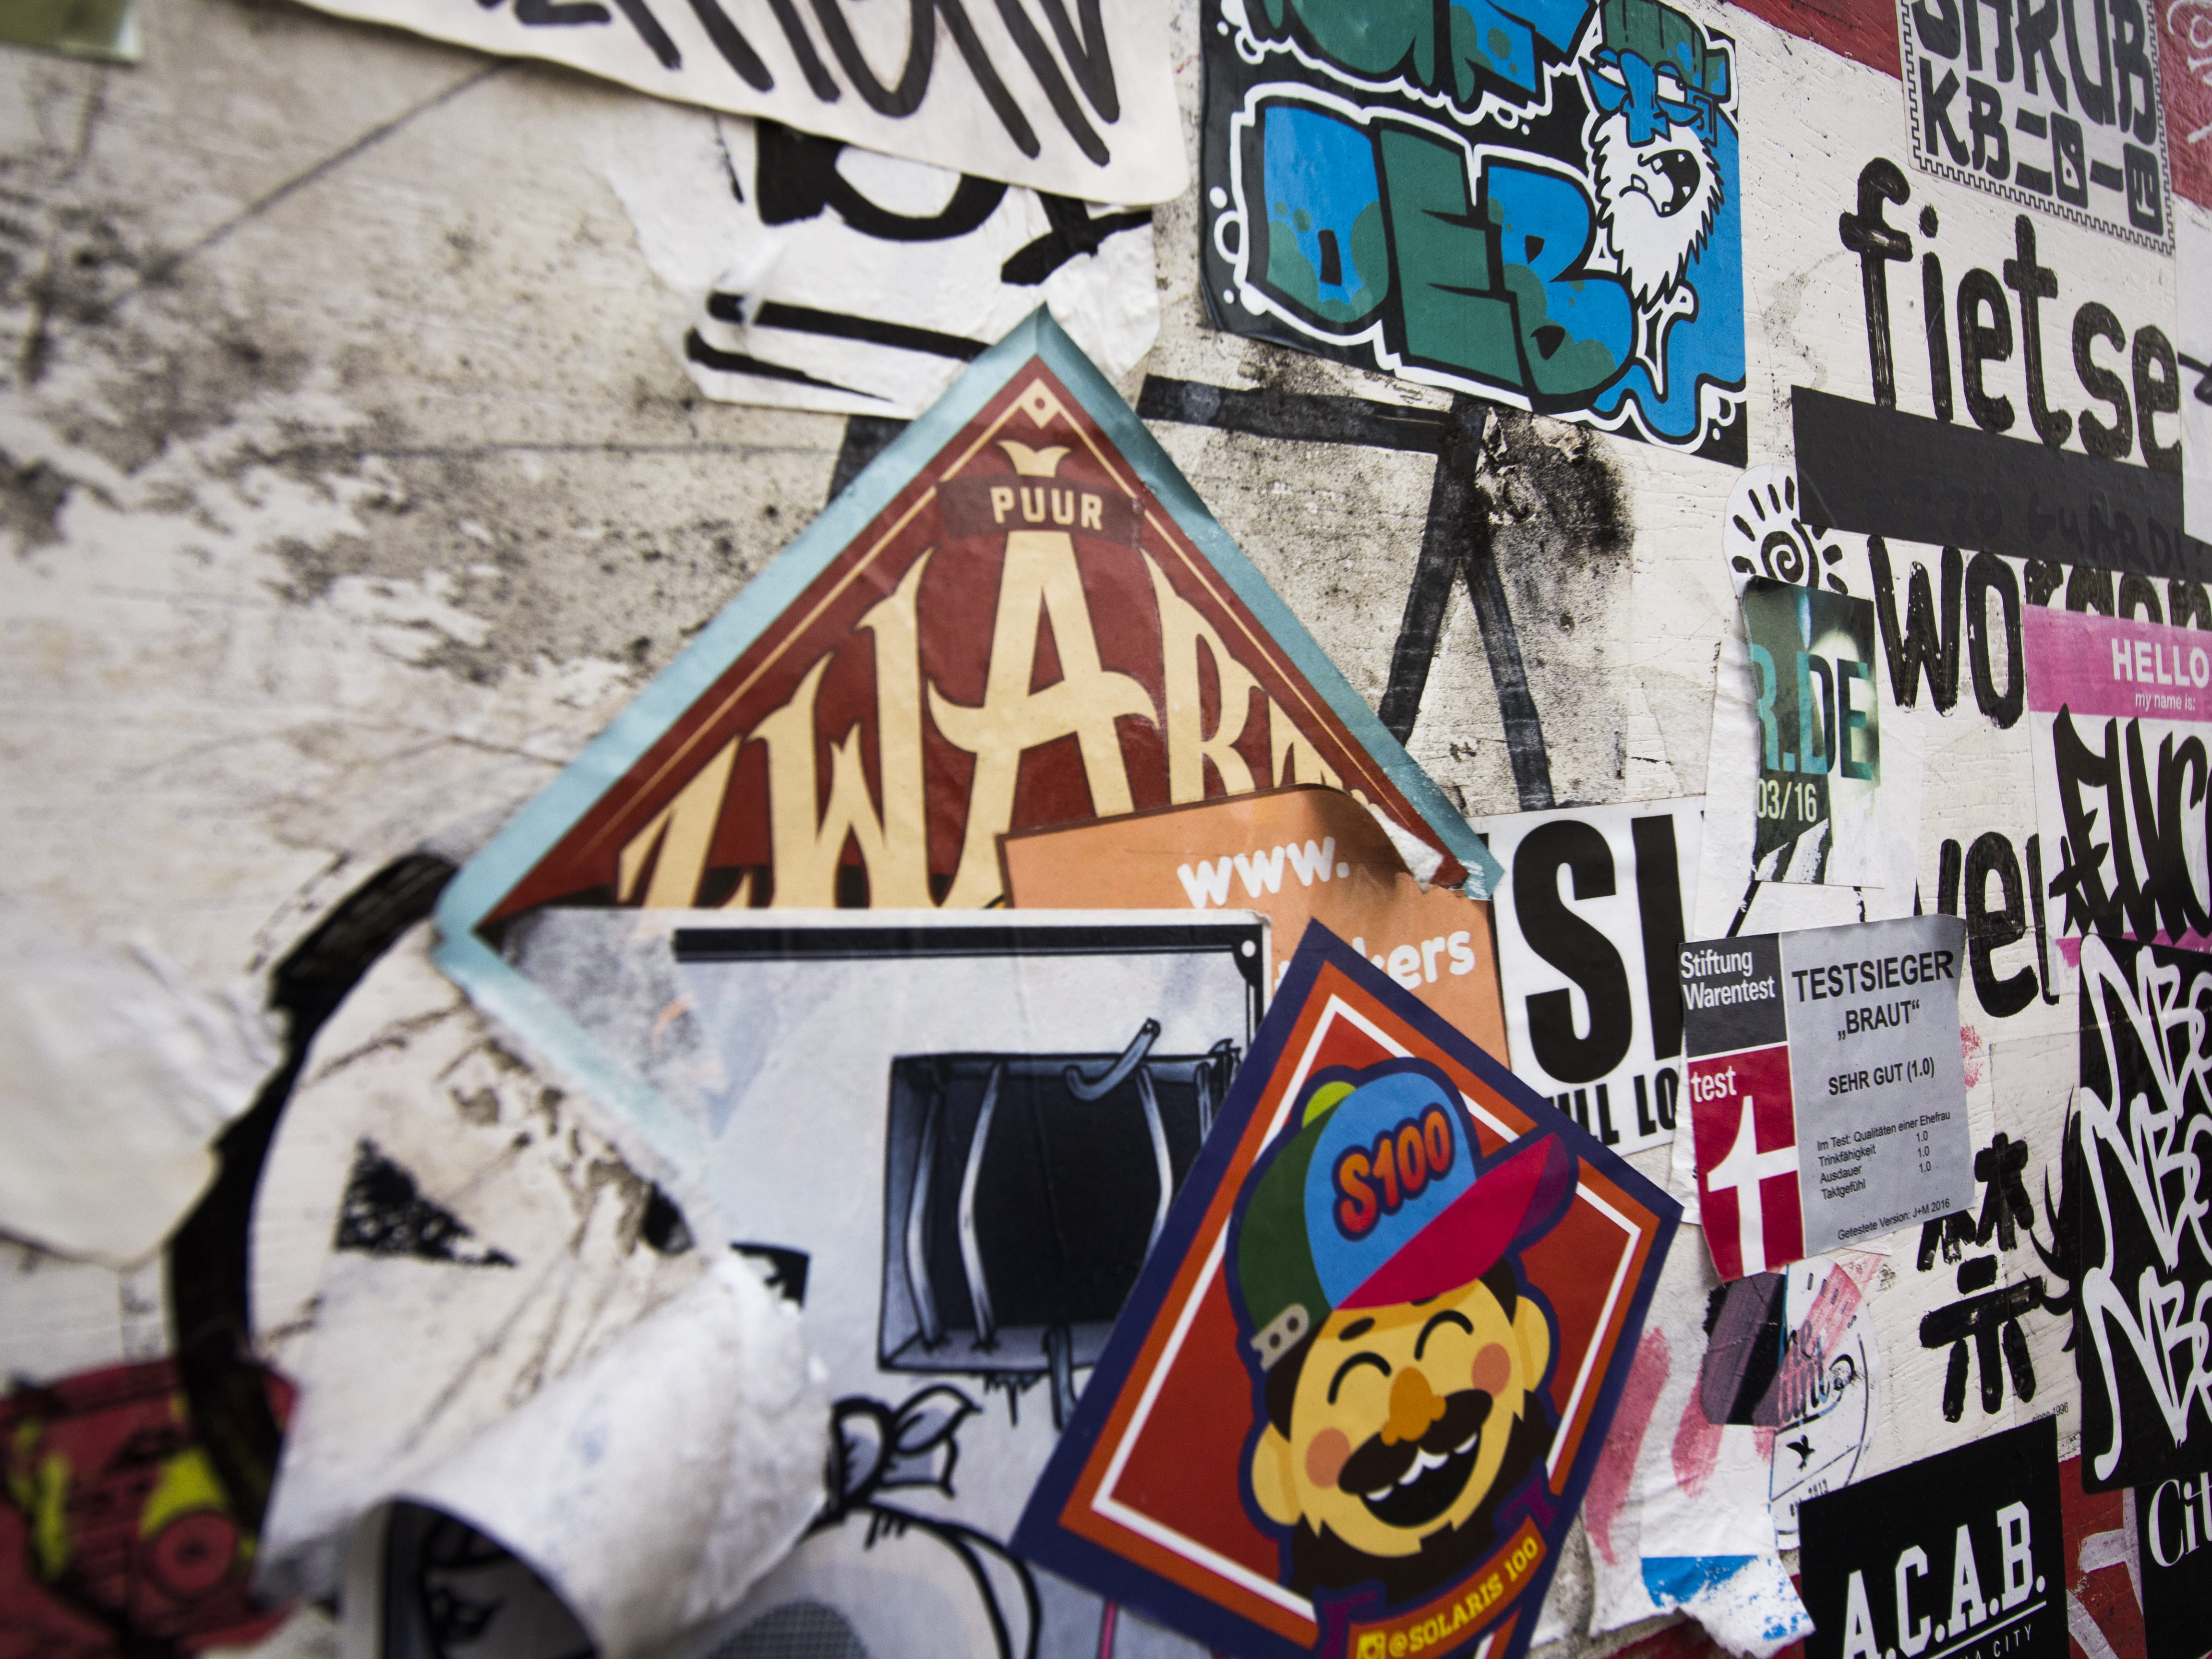 assorted stickers onwall, text, label, graffiti, art, symbol